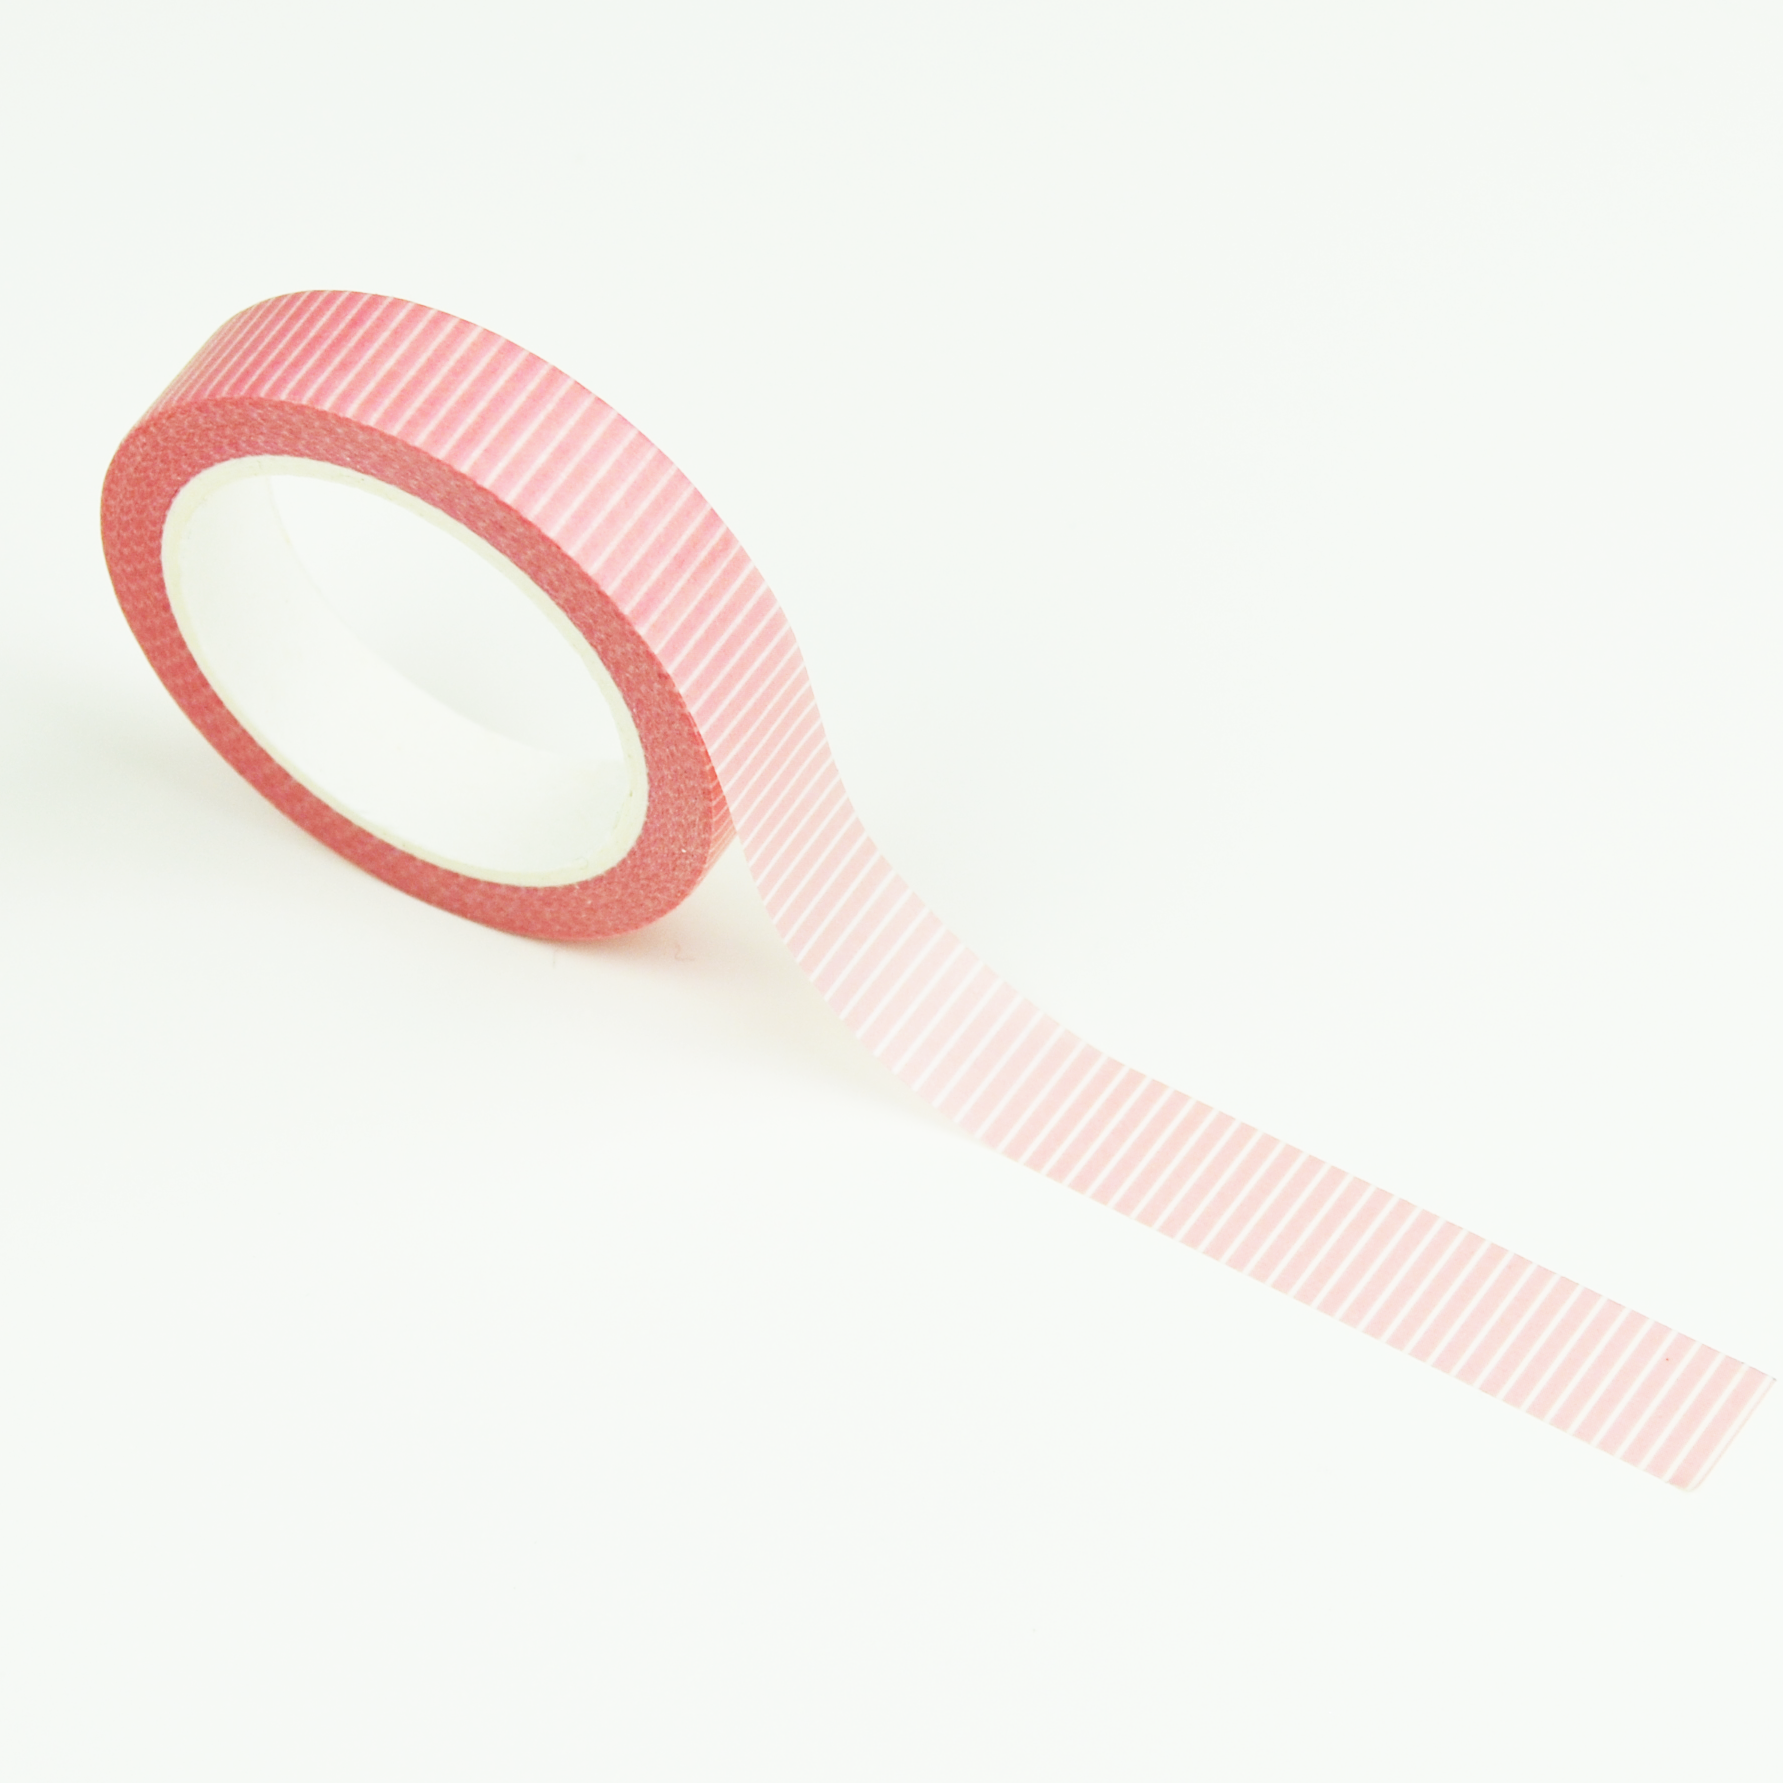 Washi tape: Soft pink stripes